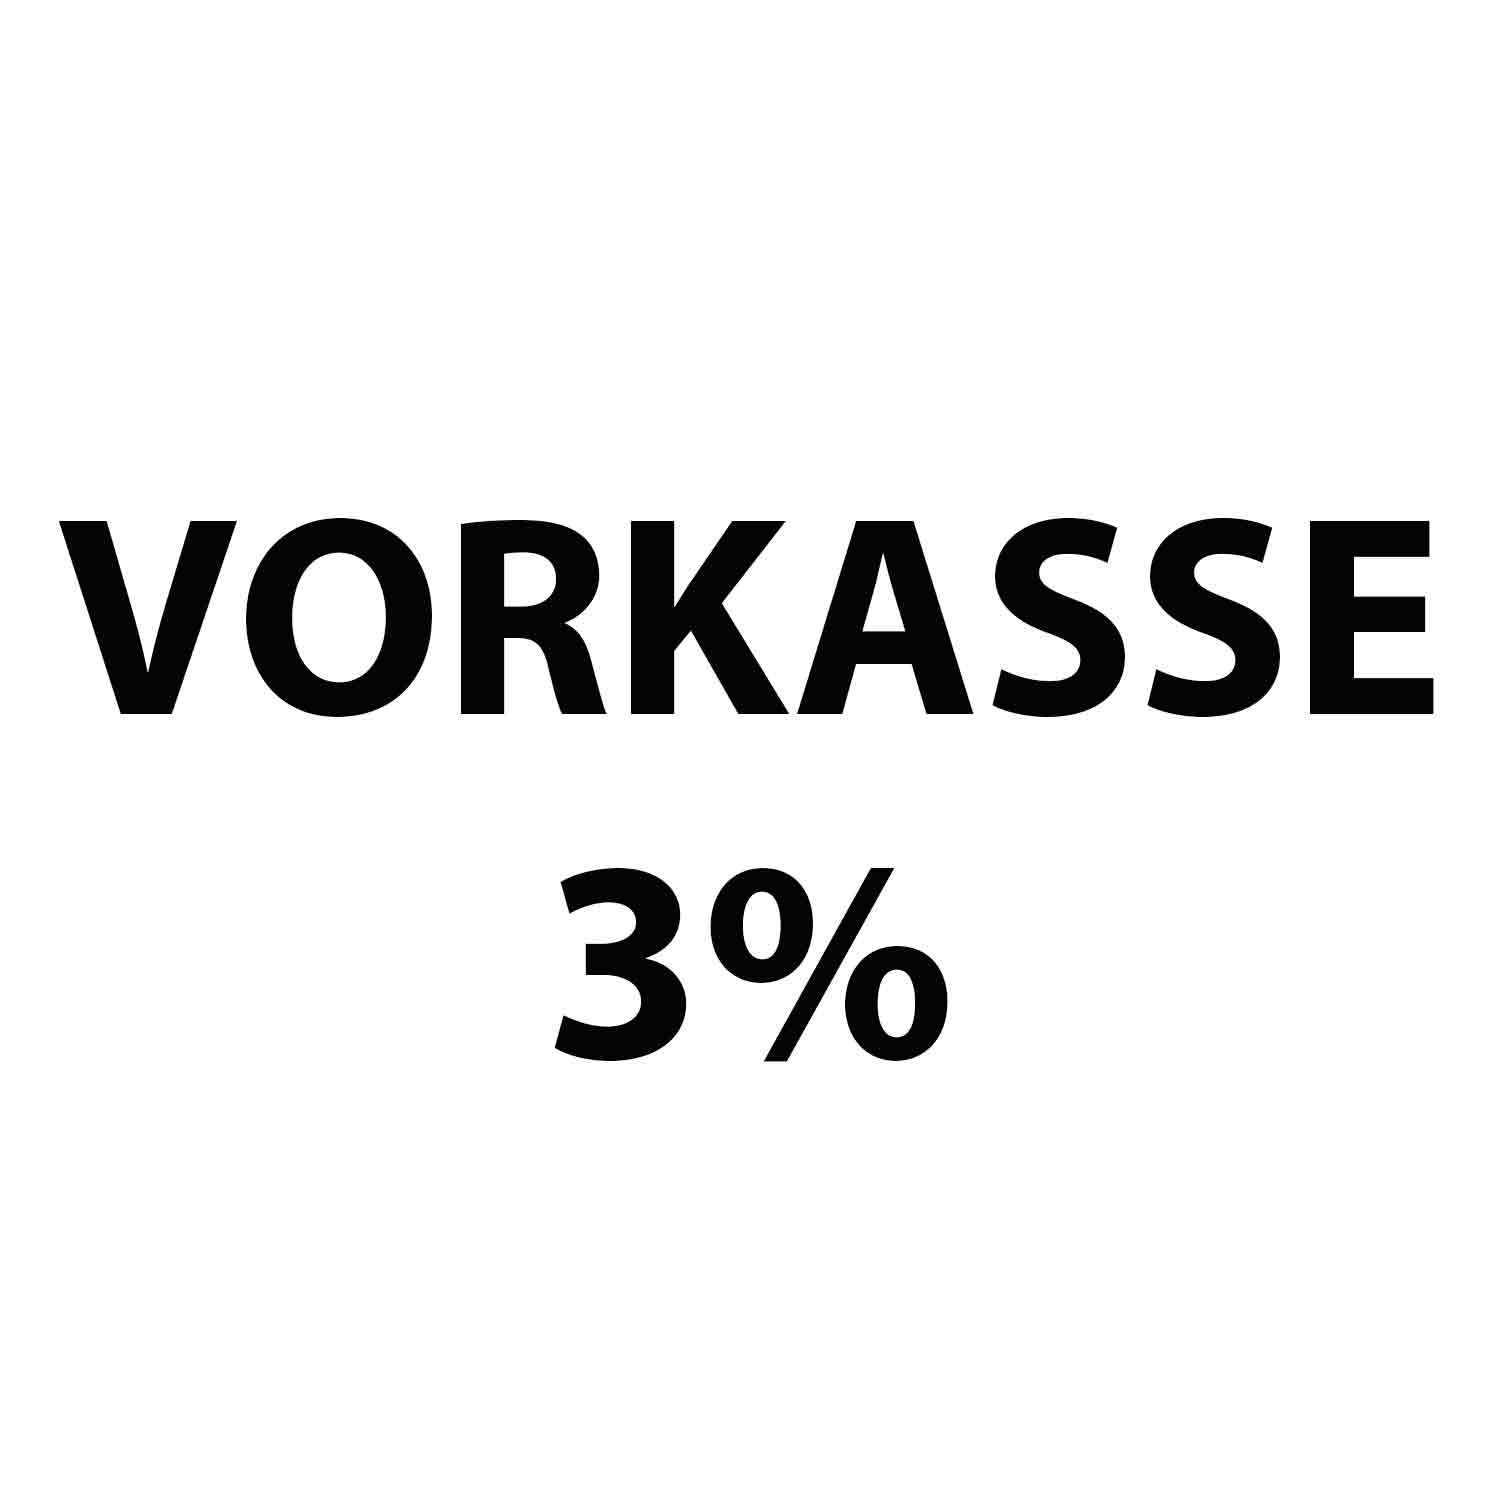 Vorkasse -3% Skonto